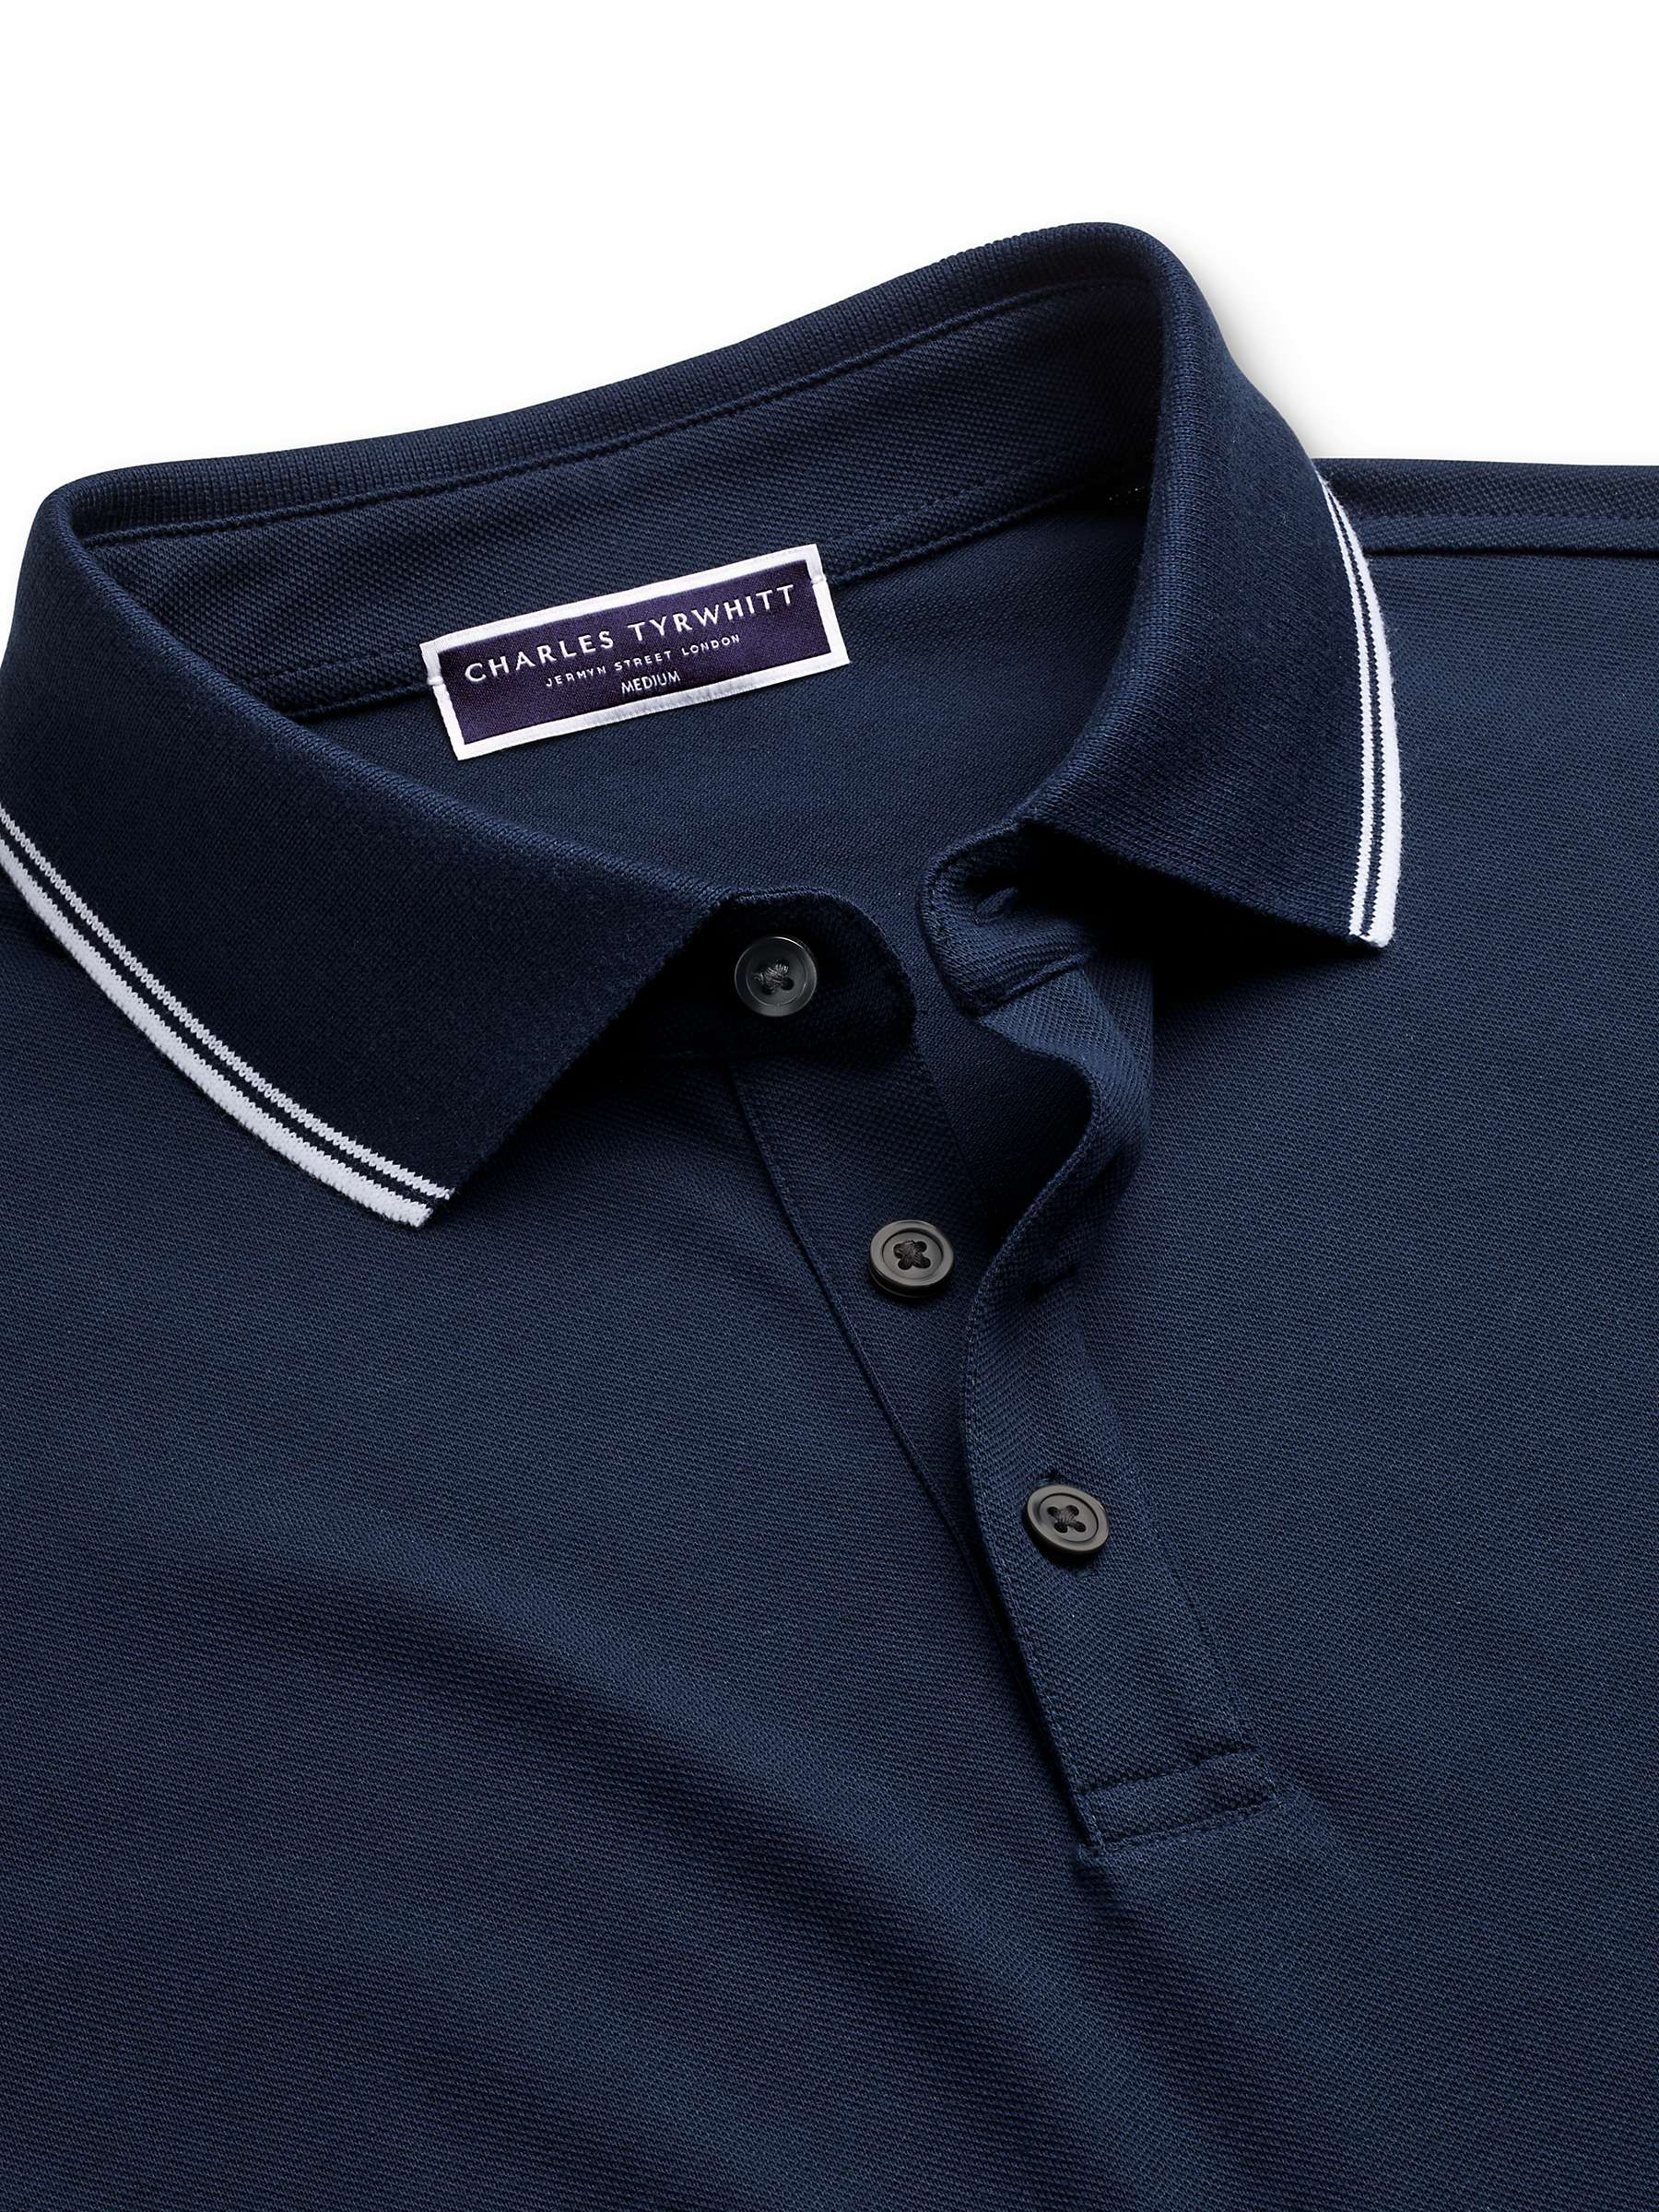 Buy Charles Tyrwhitt Contrast Tipping Short Sleeve Polo Shirt Online at johnlewis.com